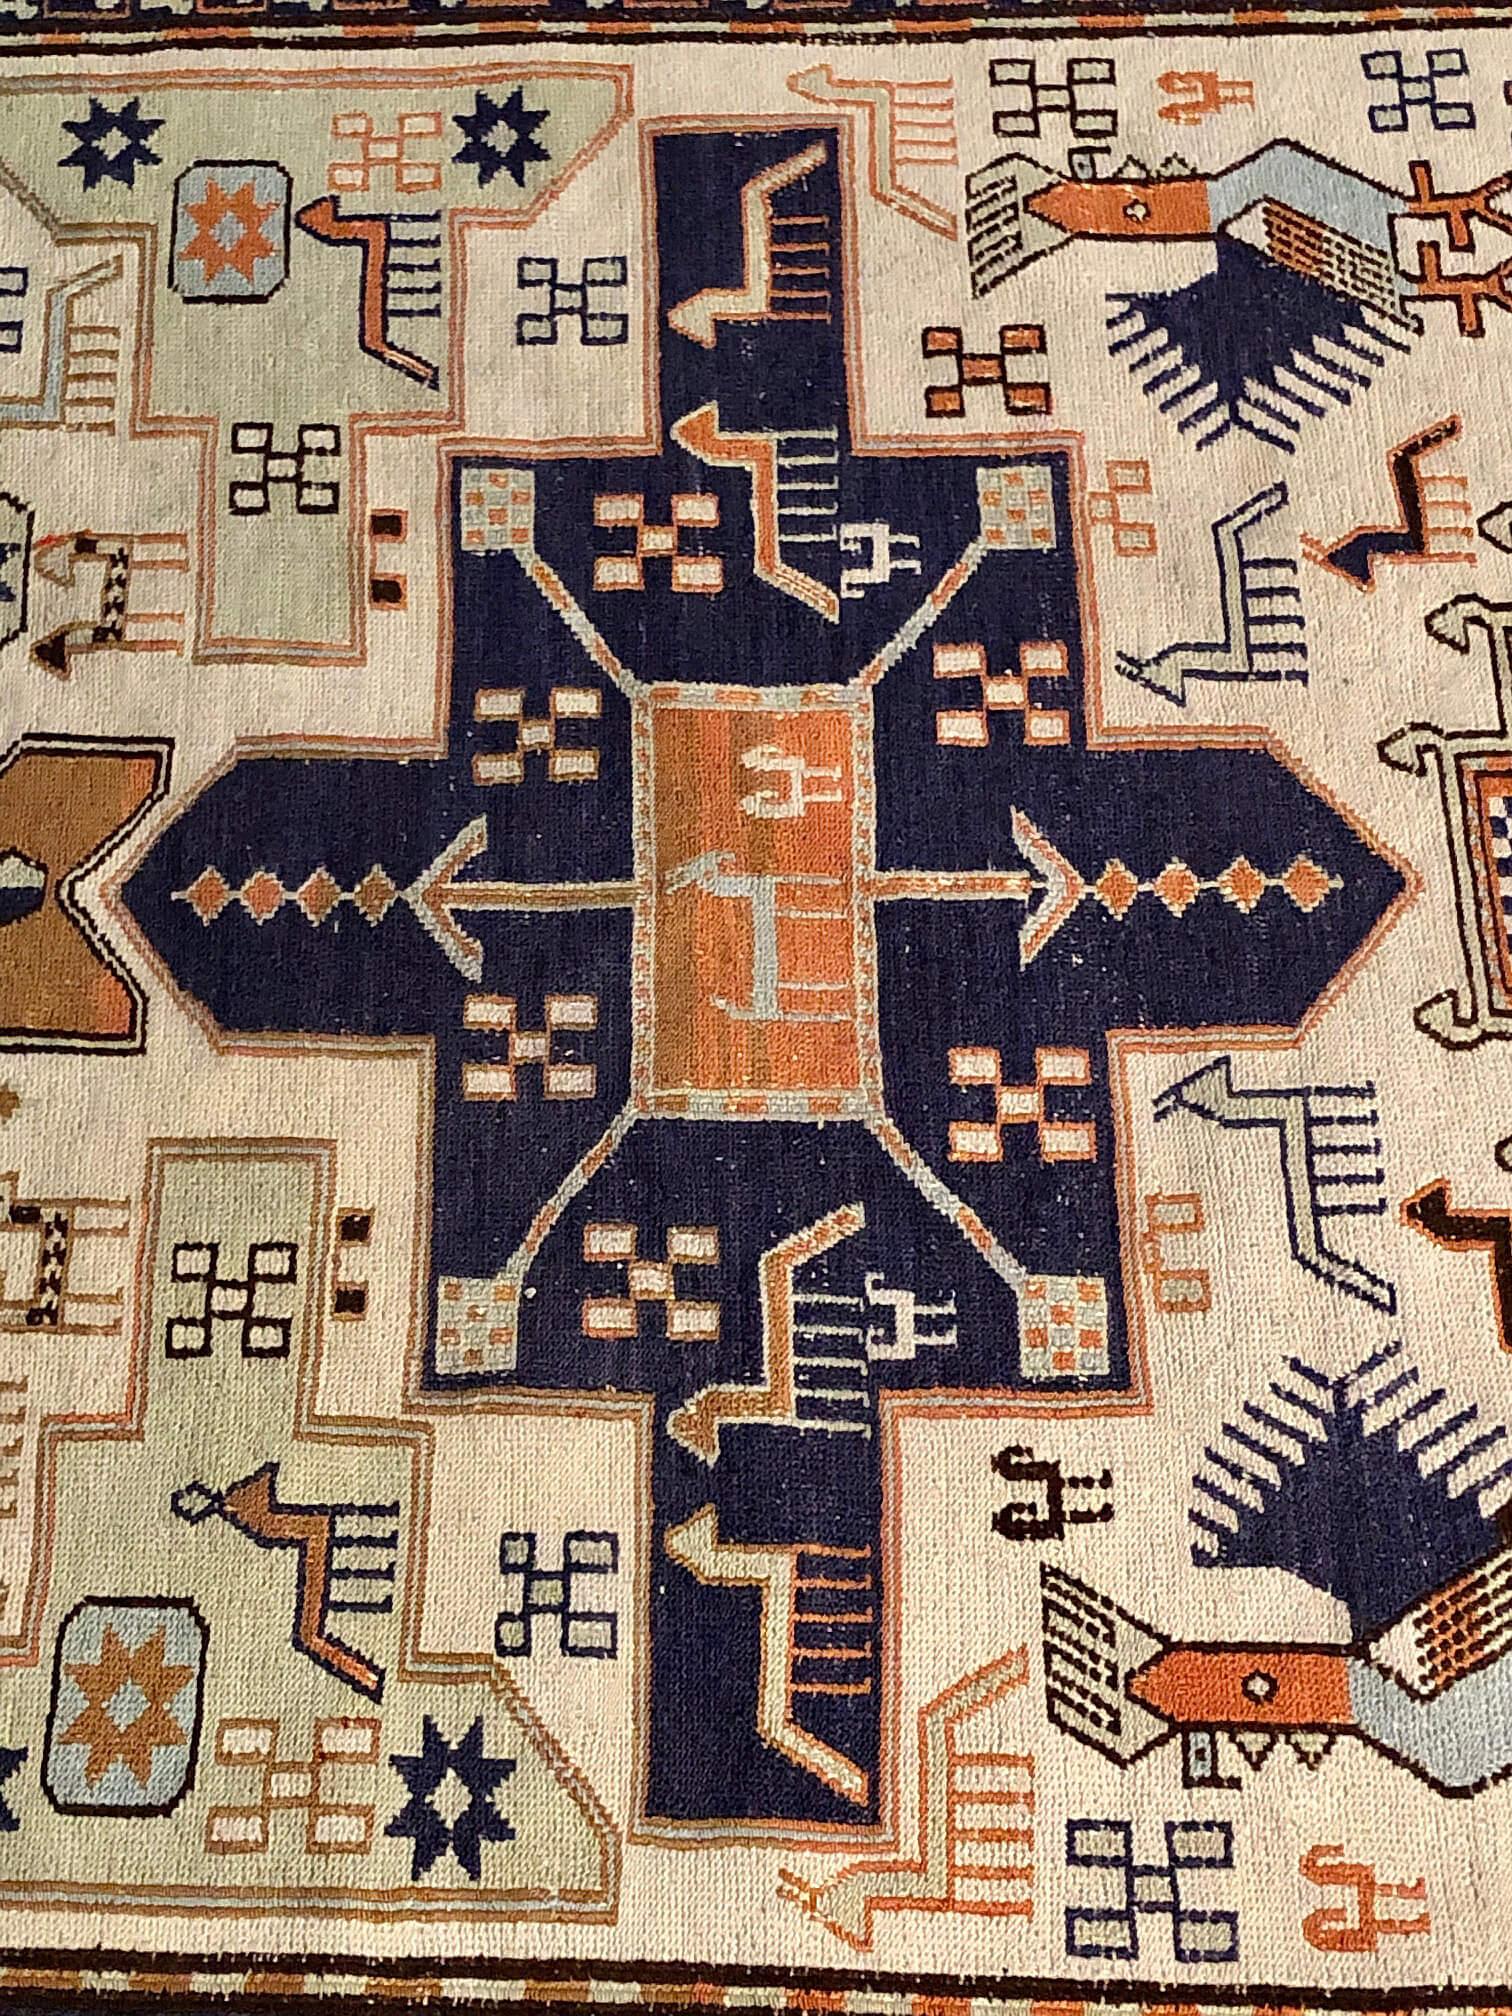 Hand-Woven Vintage Flat-Weave Persian Karajeh Tribal Rug or Carpet